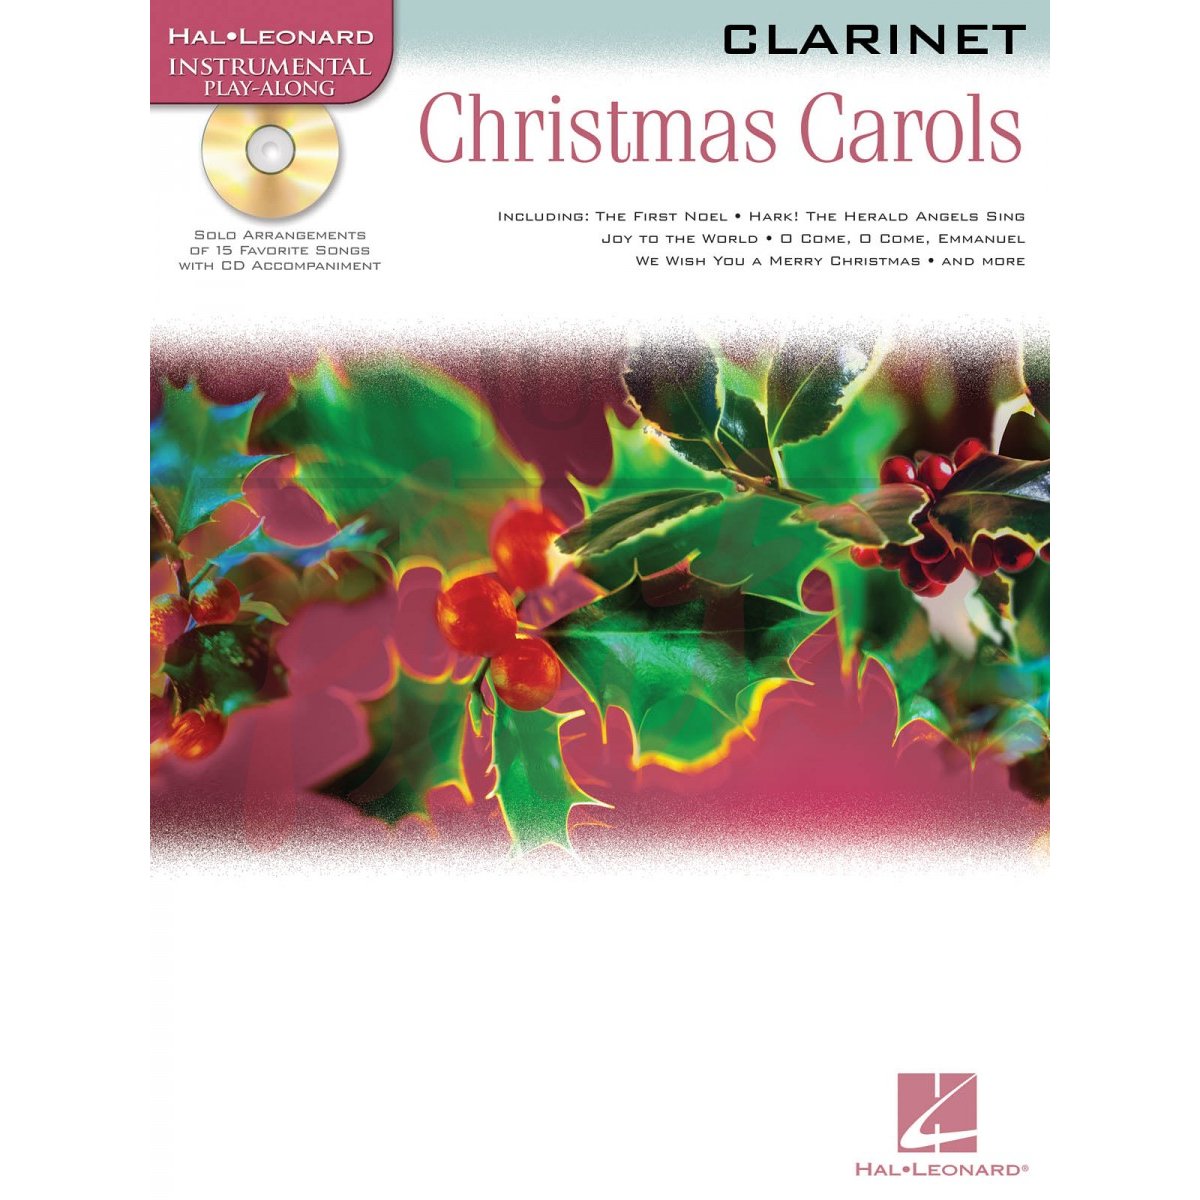 Christmas Carols [Clarinet]